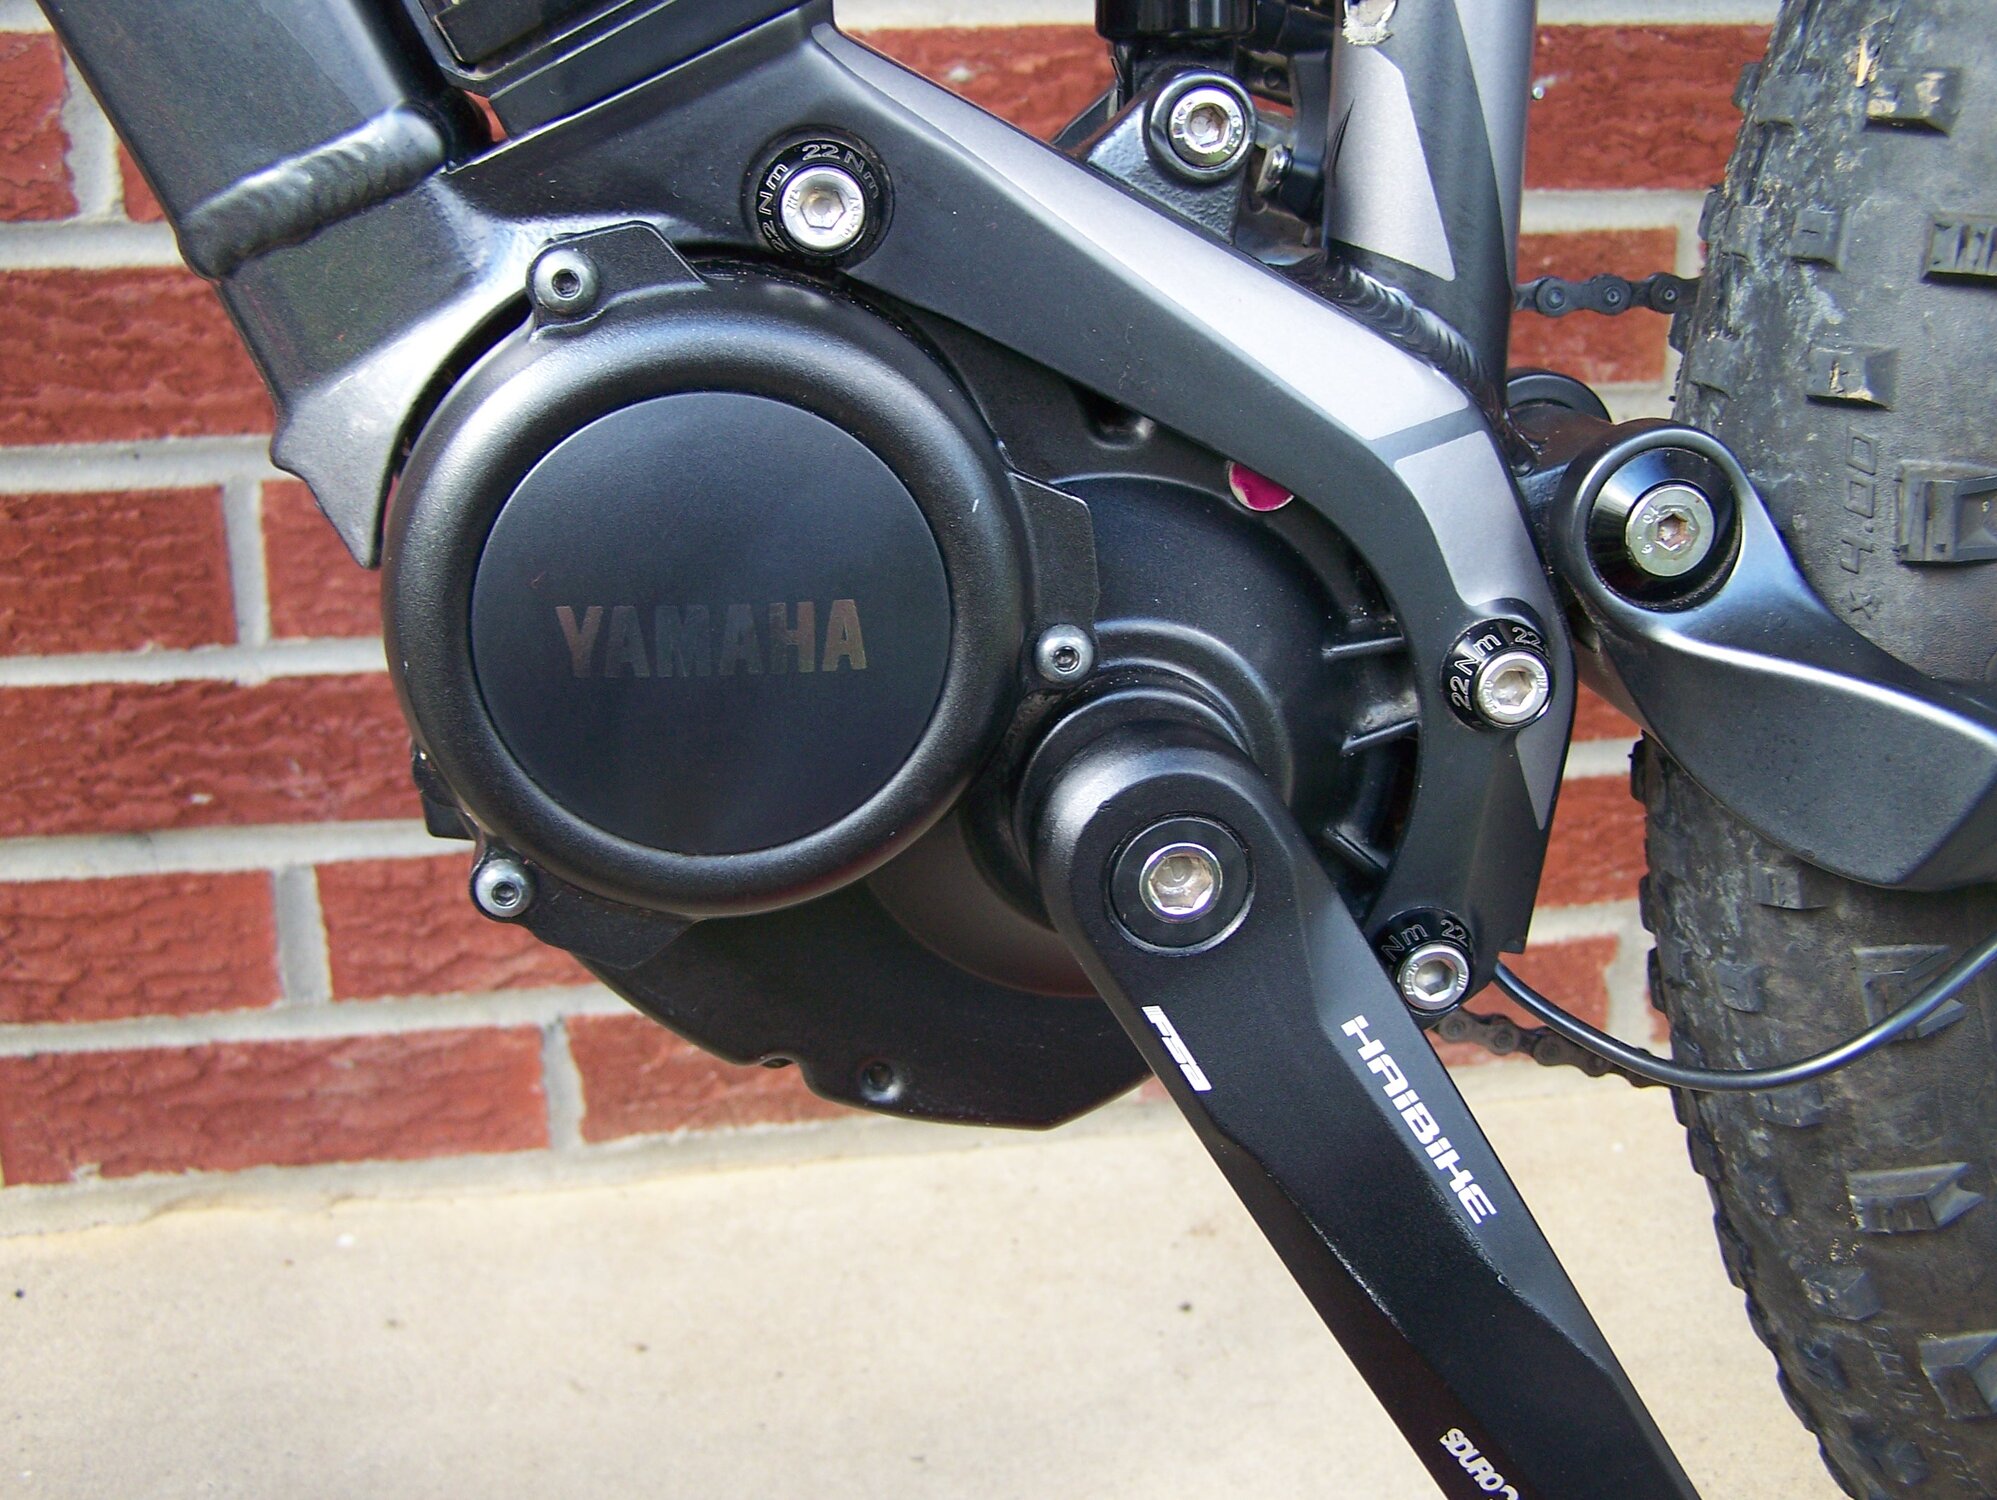 Tuning of E-bikes with a Yamaha motor :: SpeedBox Tuning